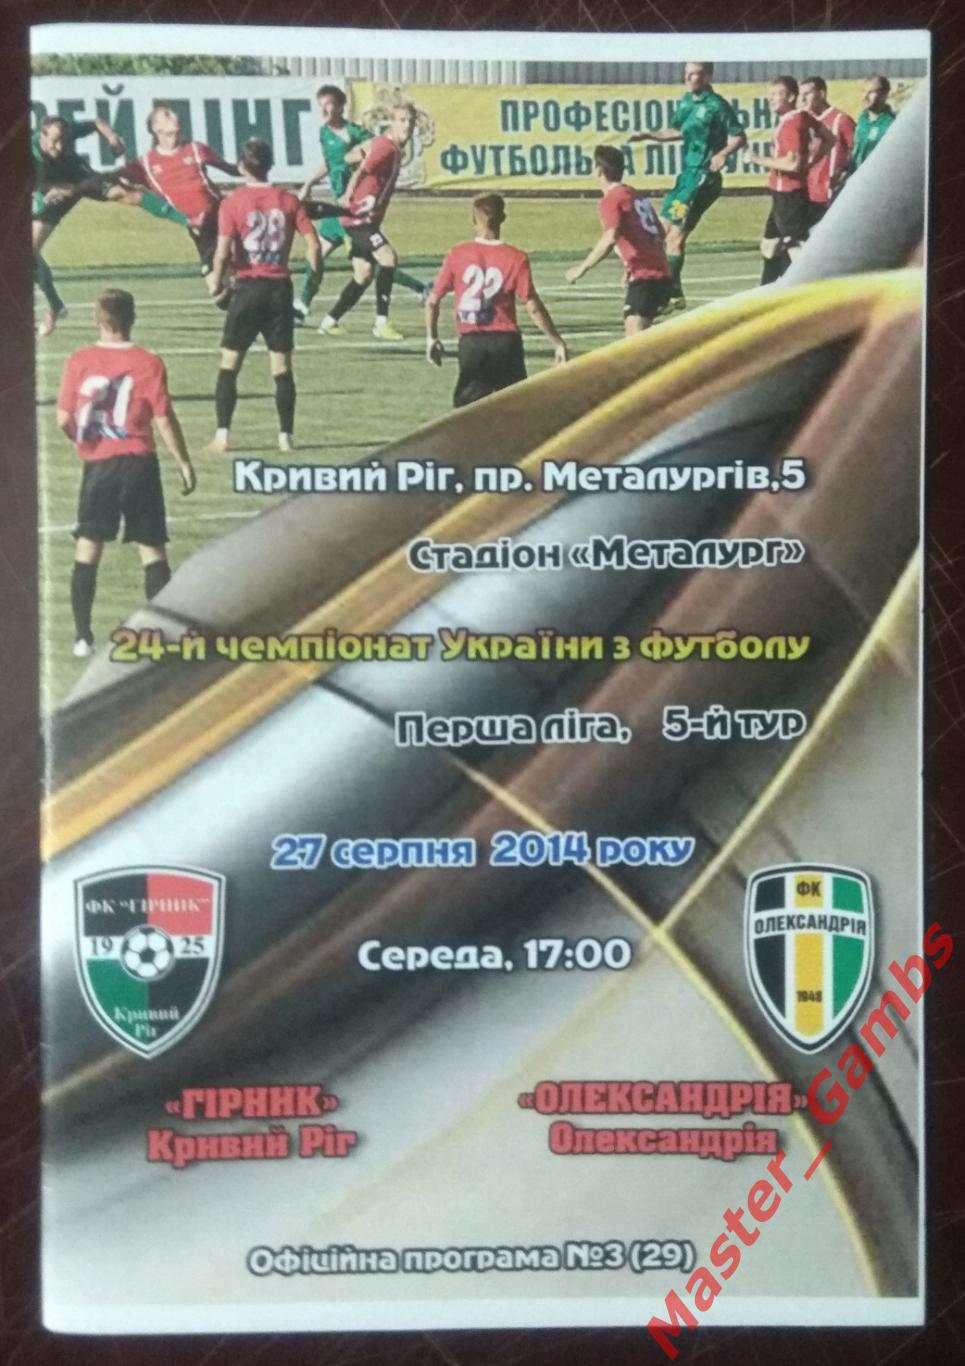 Горняк Кривой Рог - ФК Александрия 2014/2015*